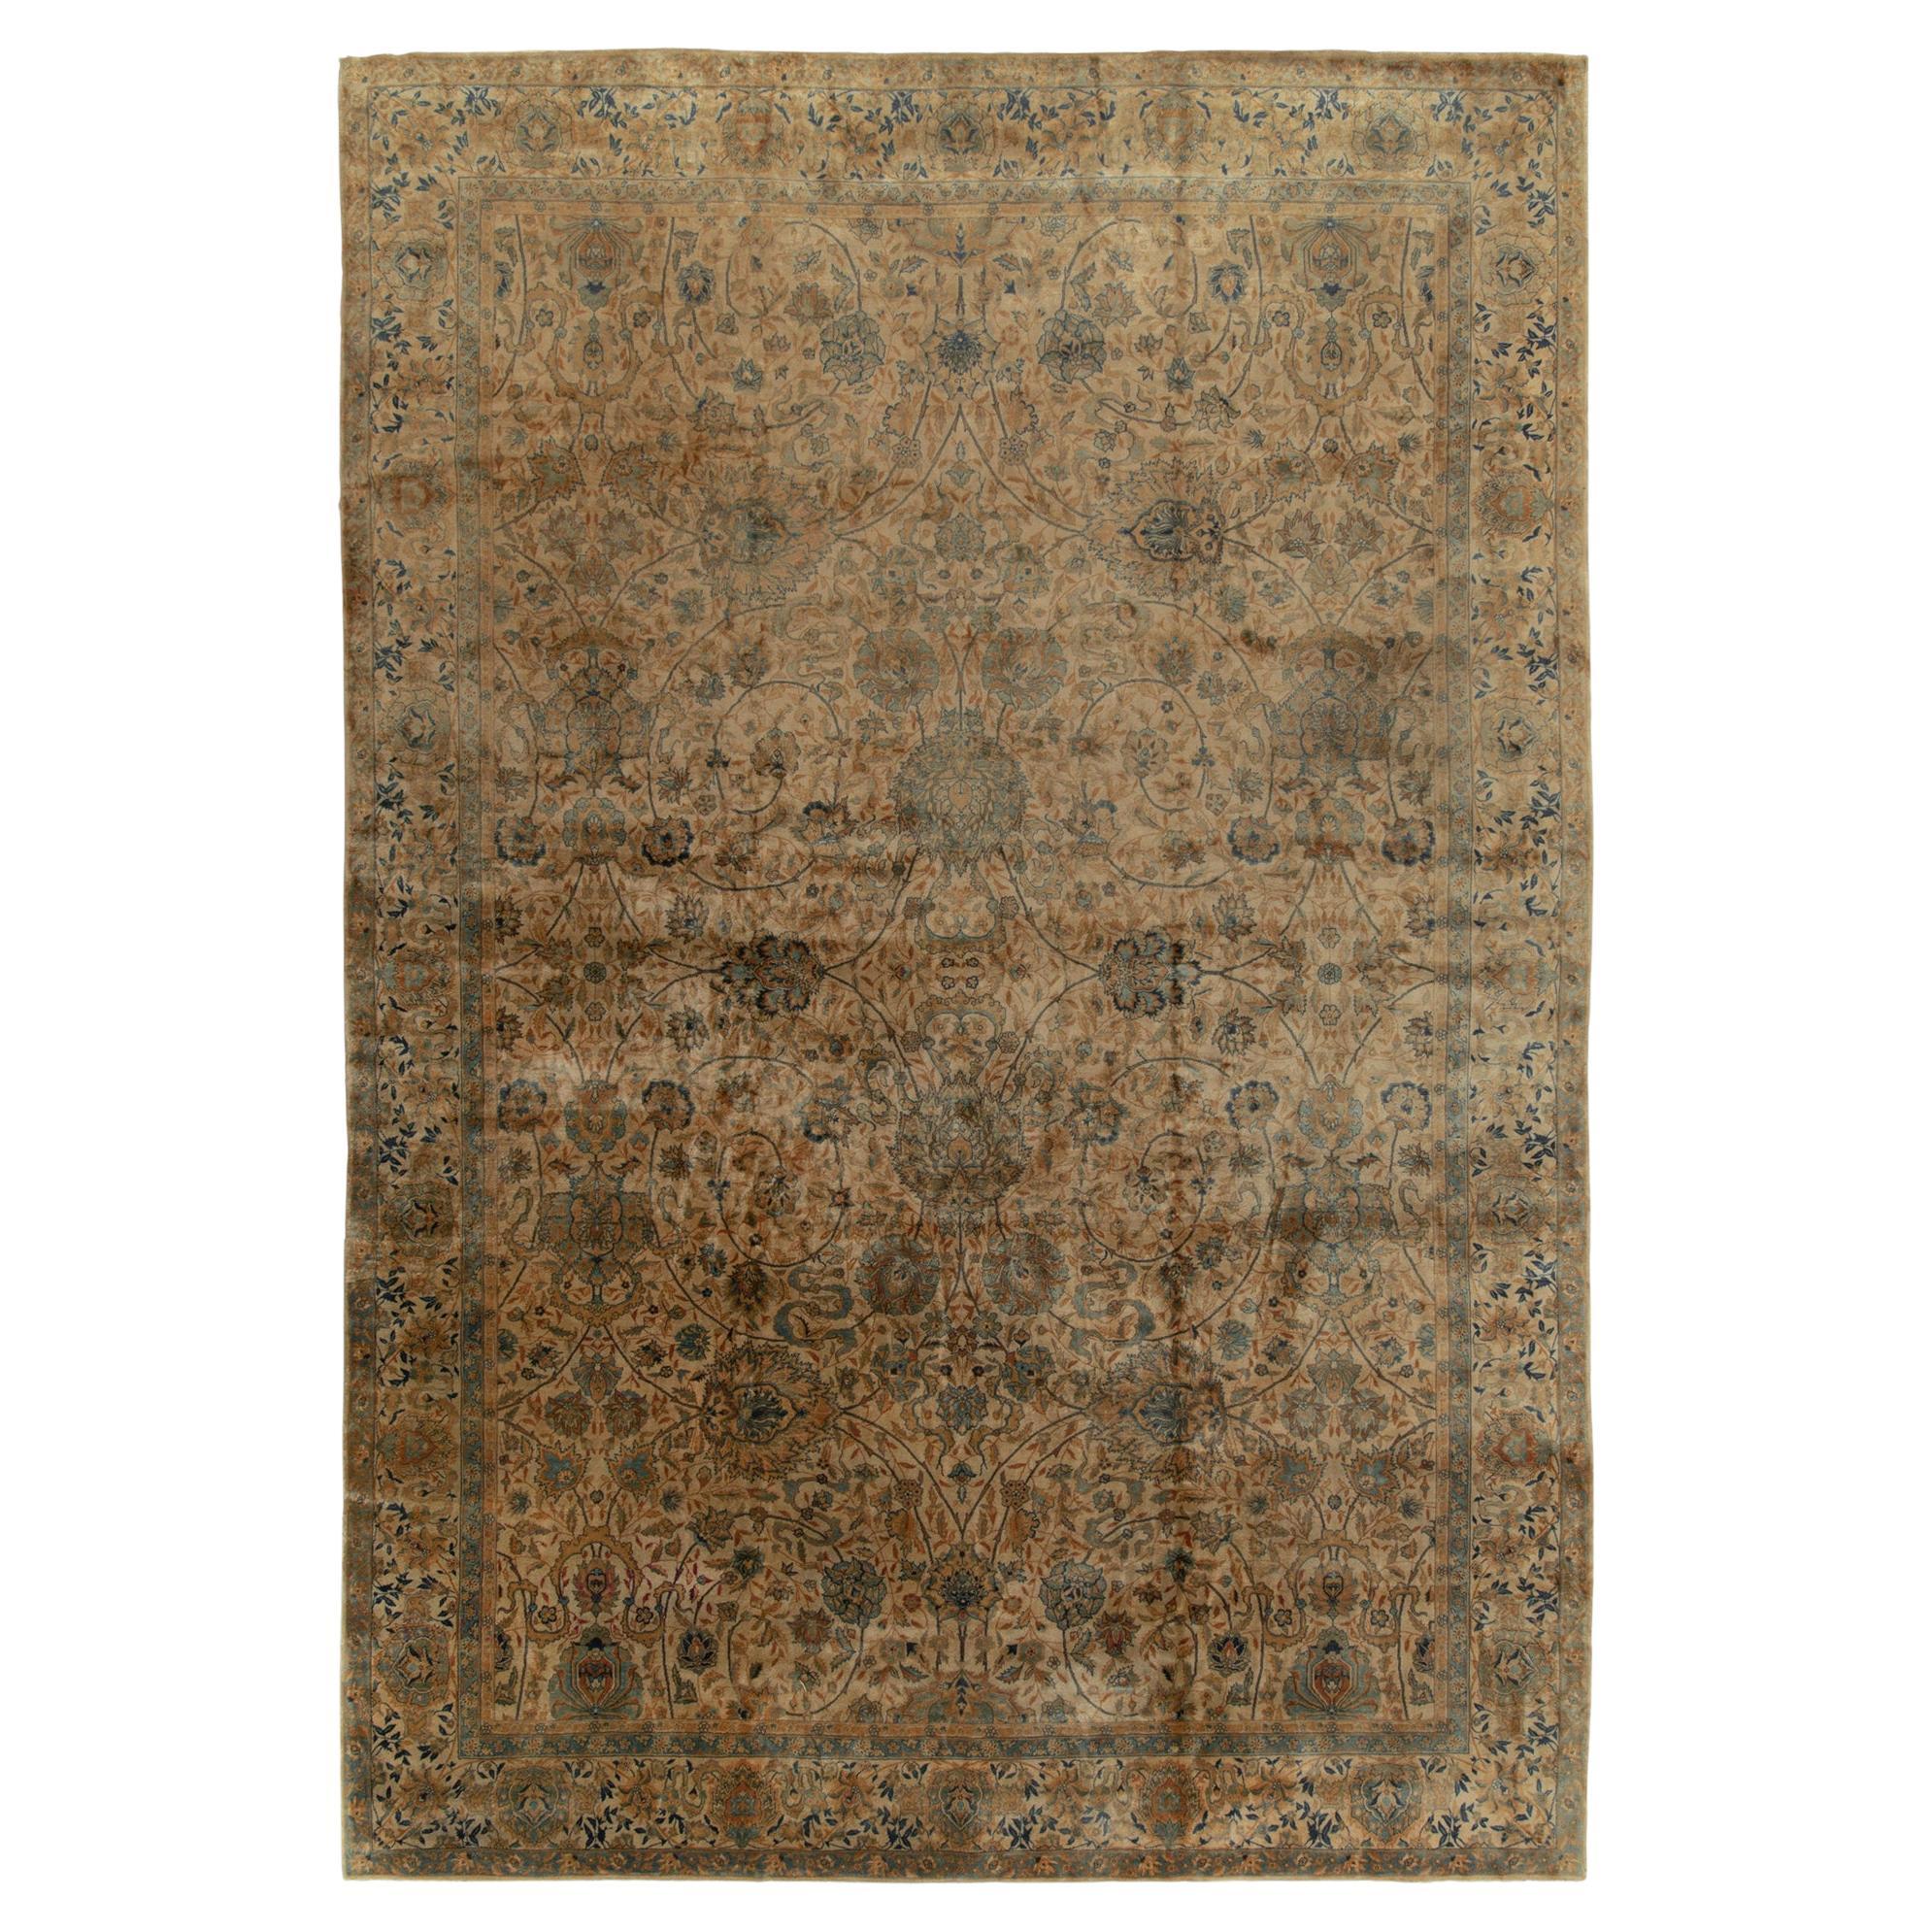 Antique Kashan style rug in Beige-Brown, Gold Blue Floral Pattern by Rug & Kilim For Sale